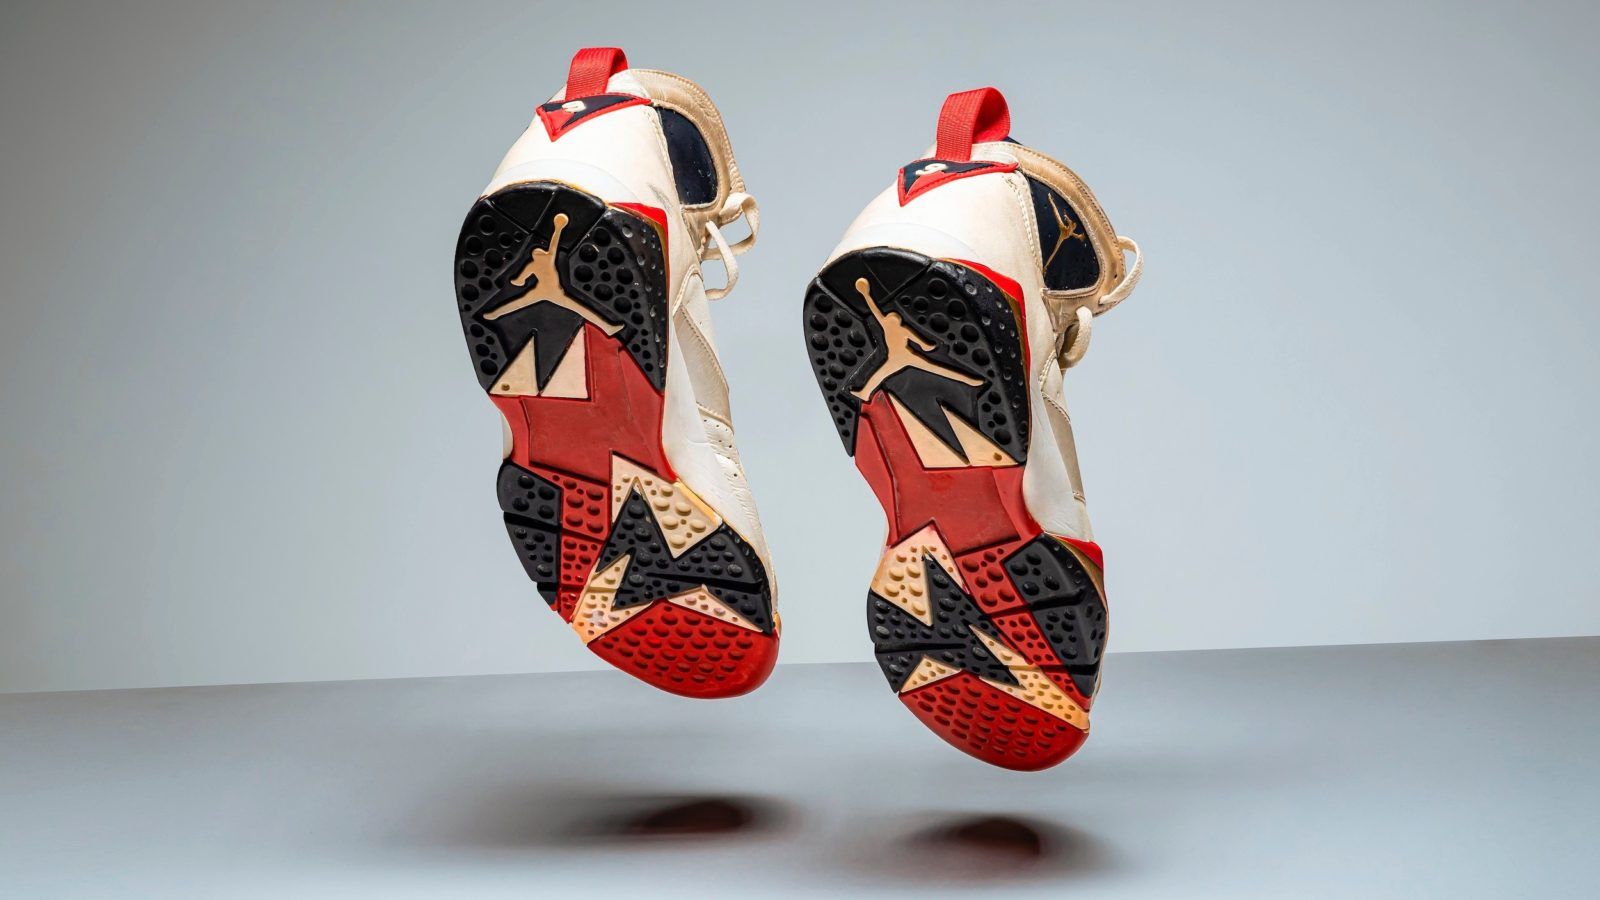 Christie’s ‘Original Air’ sale brings Michael Jordan’s rare, game-worn shoes under the hammer